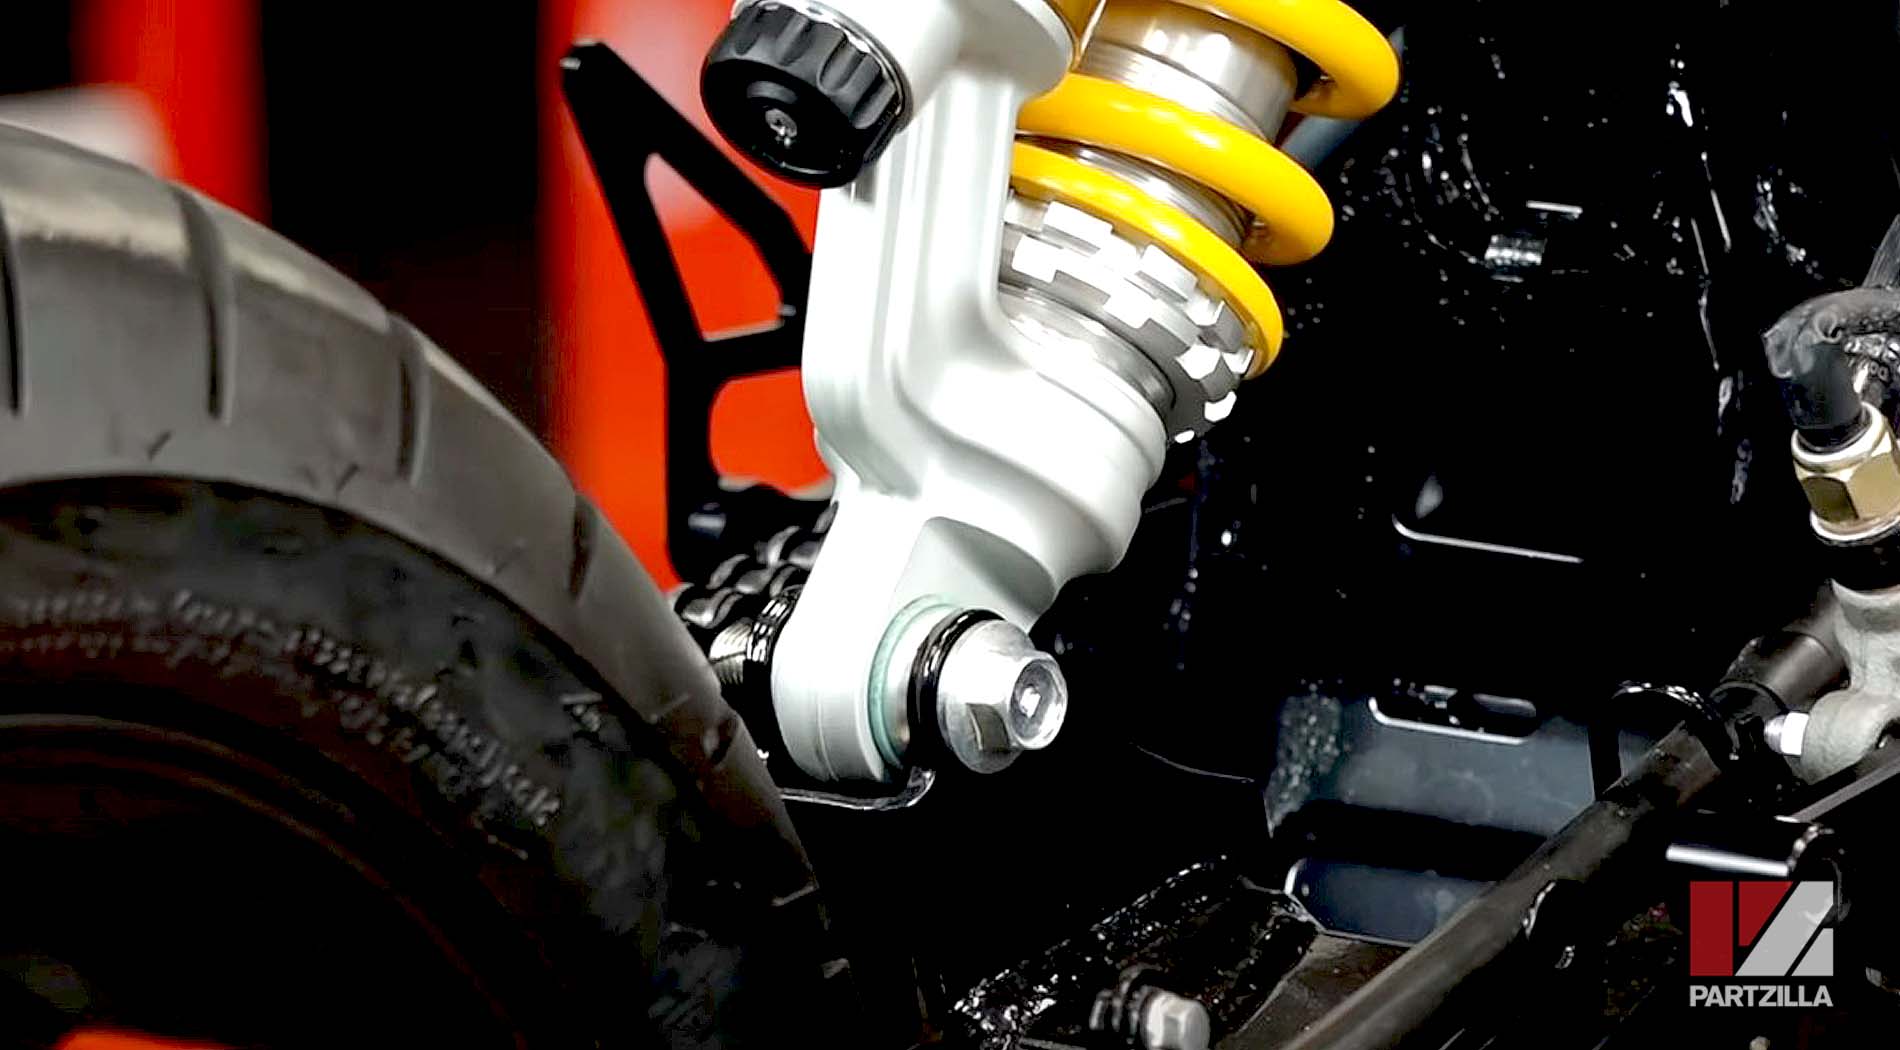 Honda Grom 125 aftermarket suspension upgrades shock absorber installation